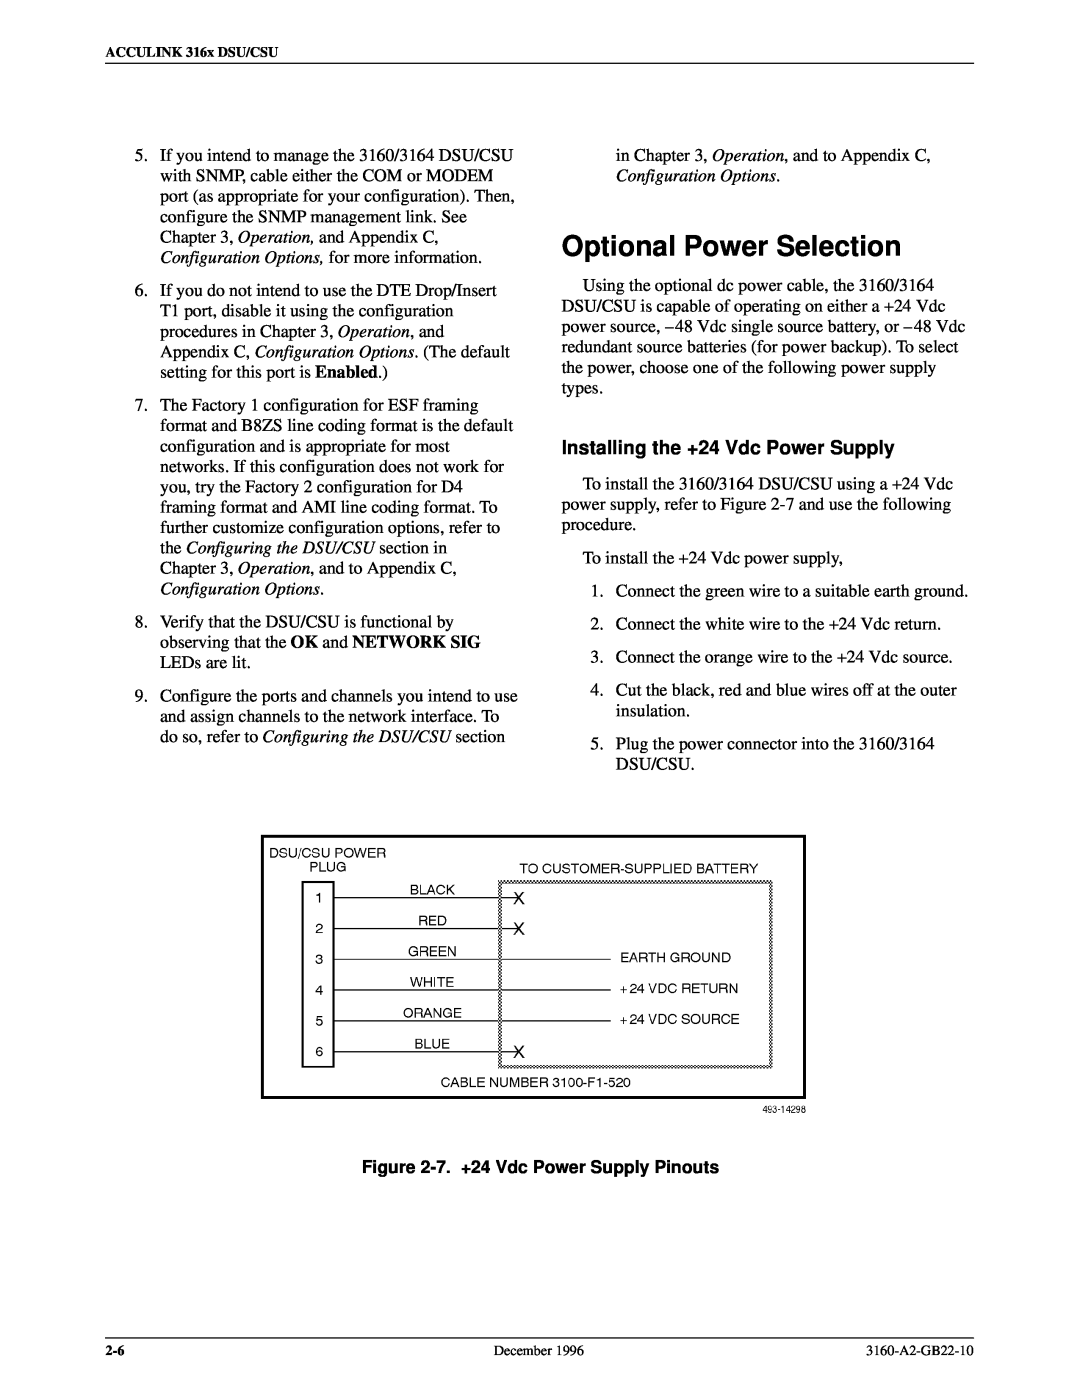 Paradyne 316x manual Optional Power Selection, Installing the +24 Vdc Power Supply, 7. +24 Vdc Power Supply Pinouts 